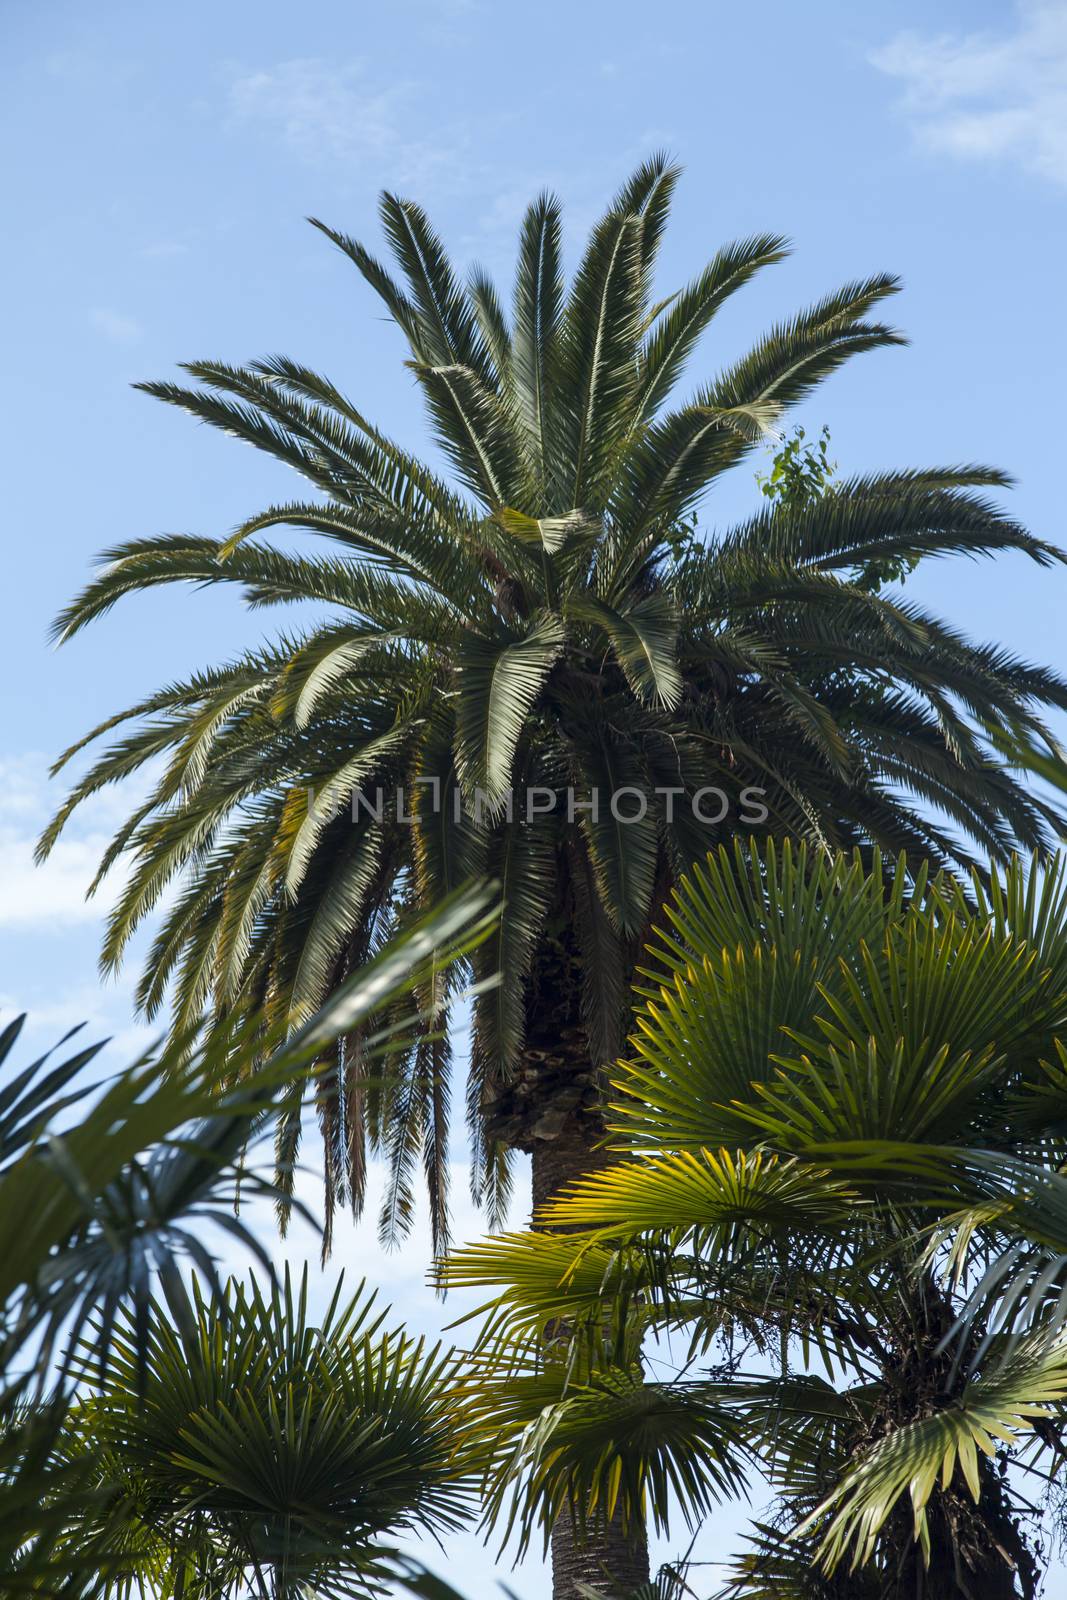 Palm trees in park by selezenj